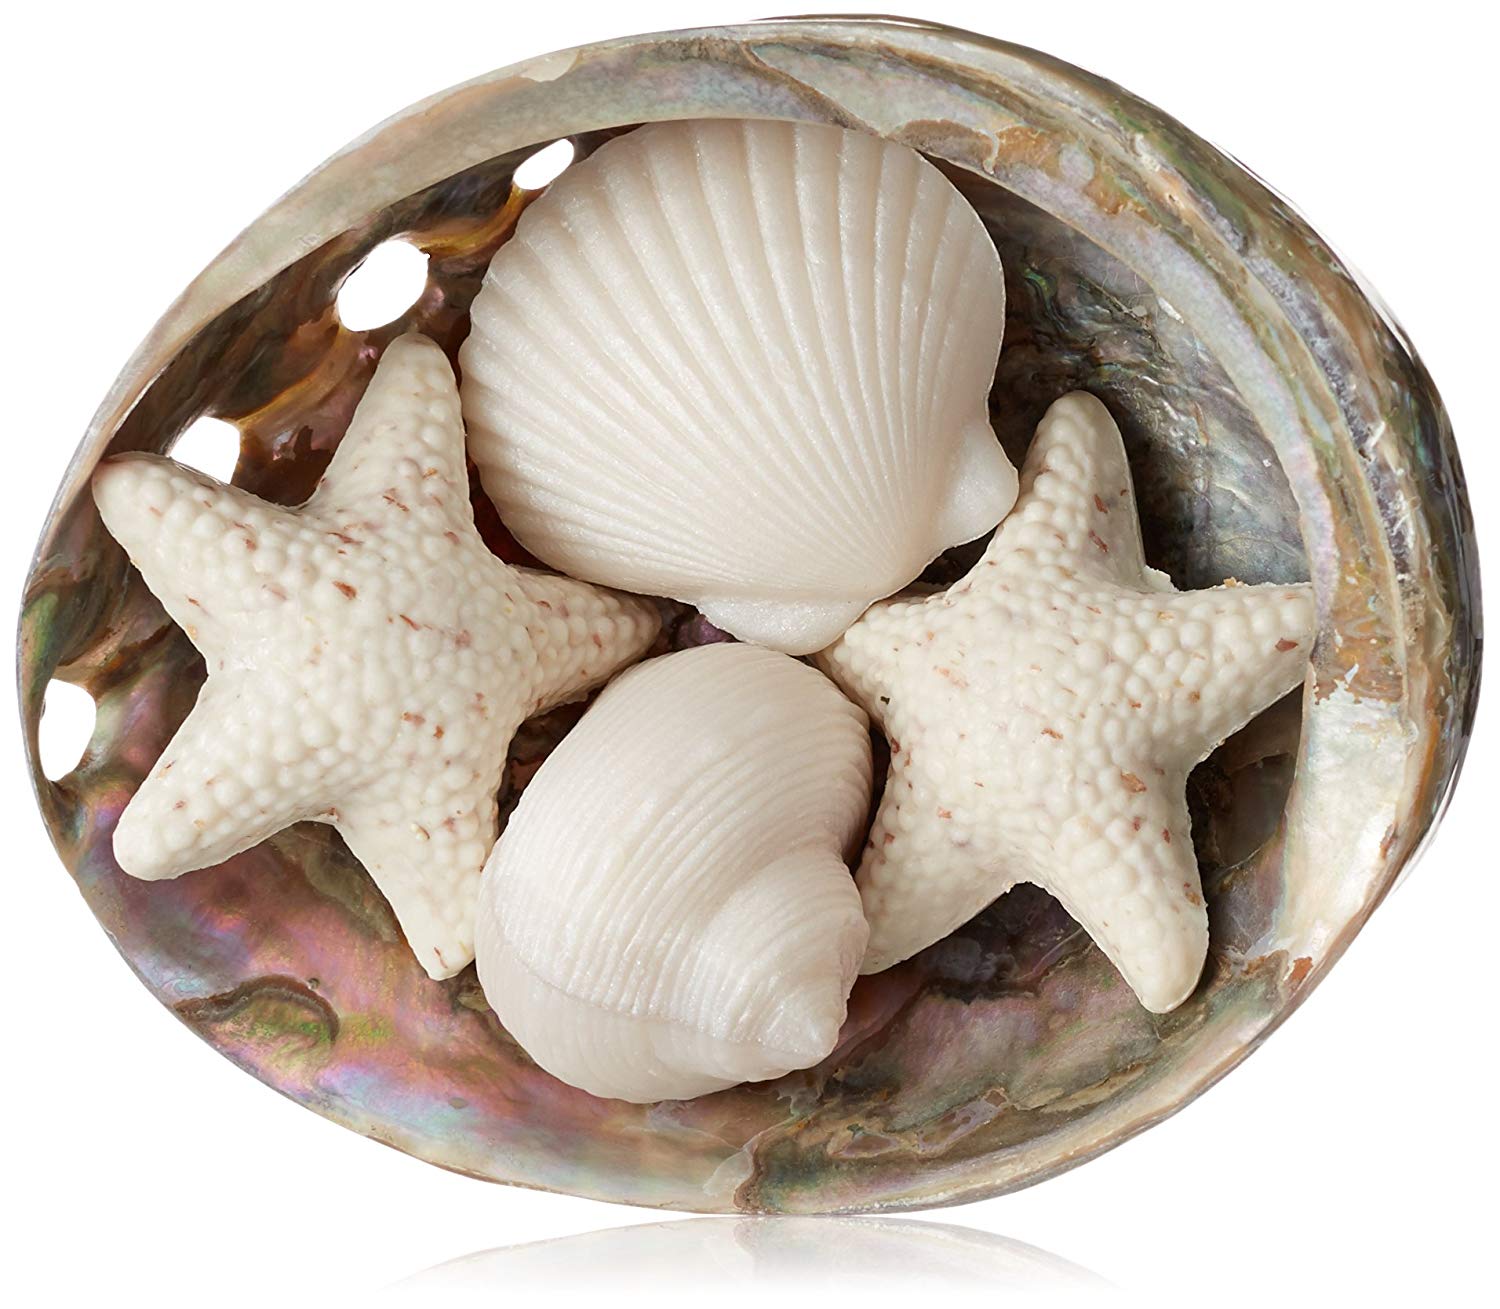 Amazon.com: Gianna Rose Seashell Soaps in a Pearlized Shell Dish ...